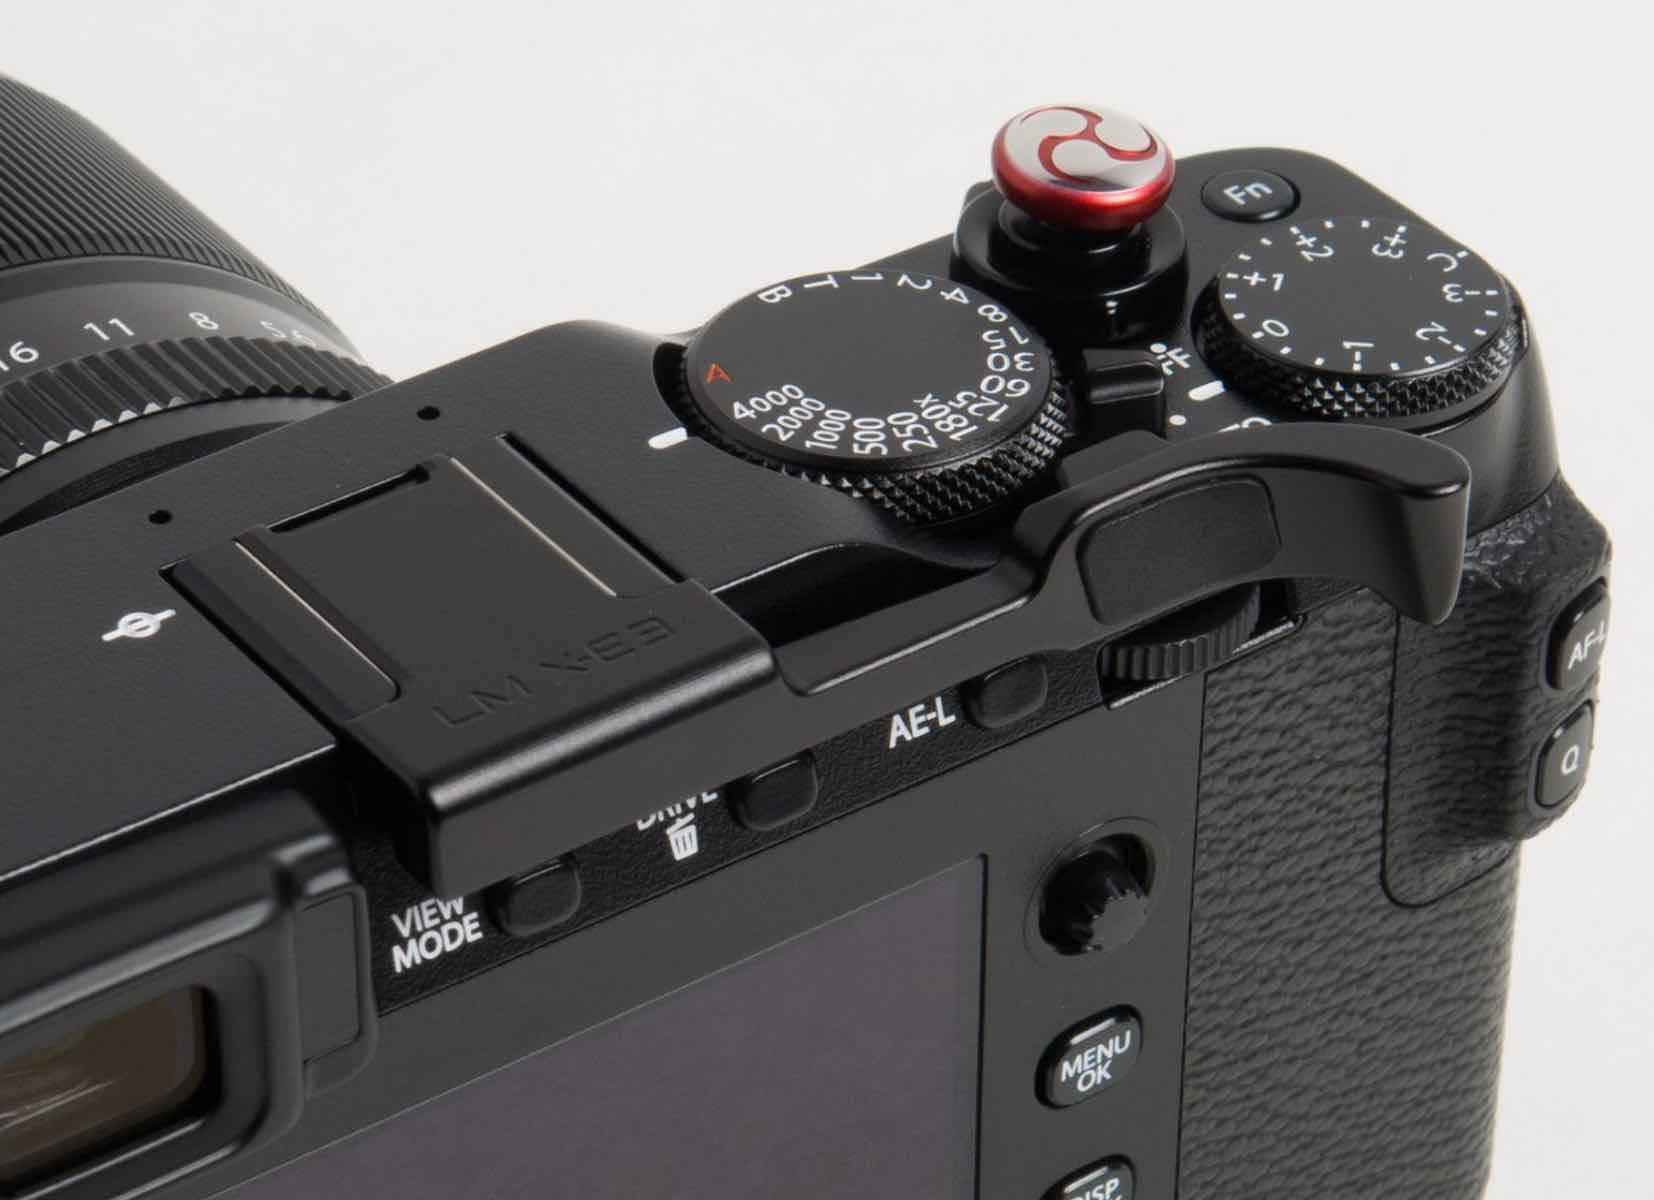 Raak verstrikt dichtbij Burgerschap Fujifilm X-E3 Roundup: Lensmate Thumb Grip, Kaza Half Leather Case, X100F  or X-E3 First Camera, Reviews and More - Fuji Rumors